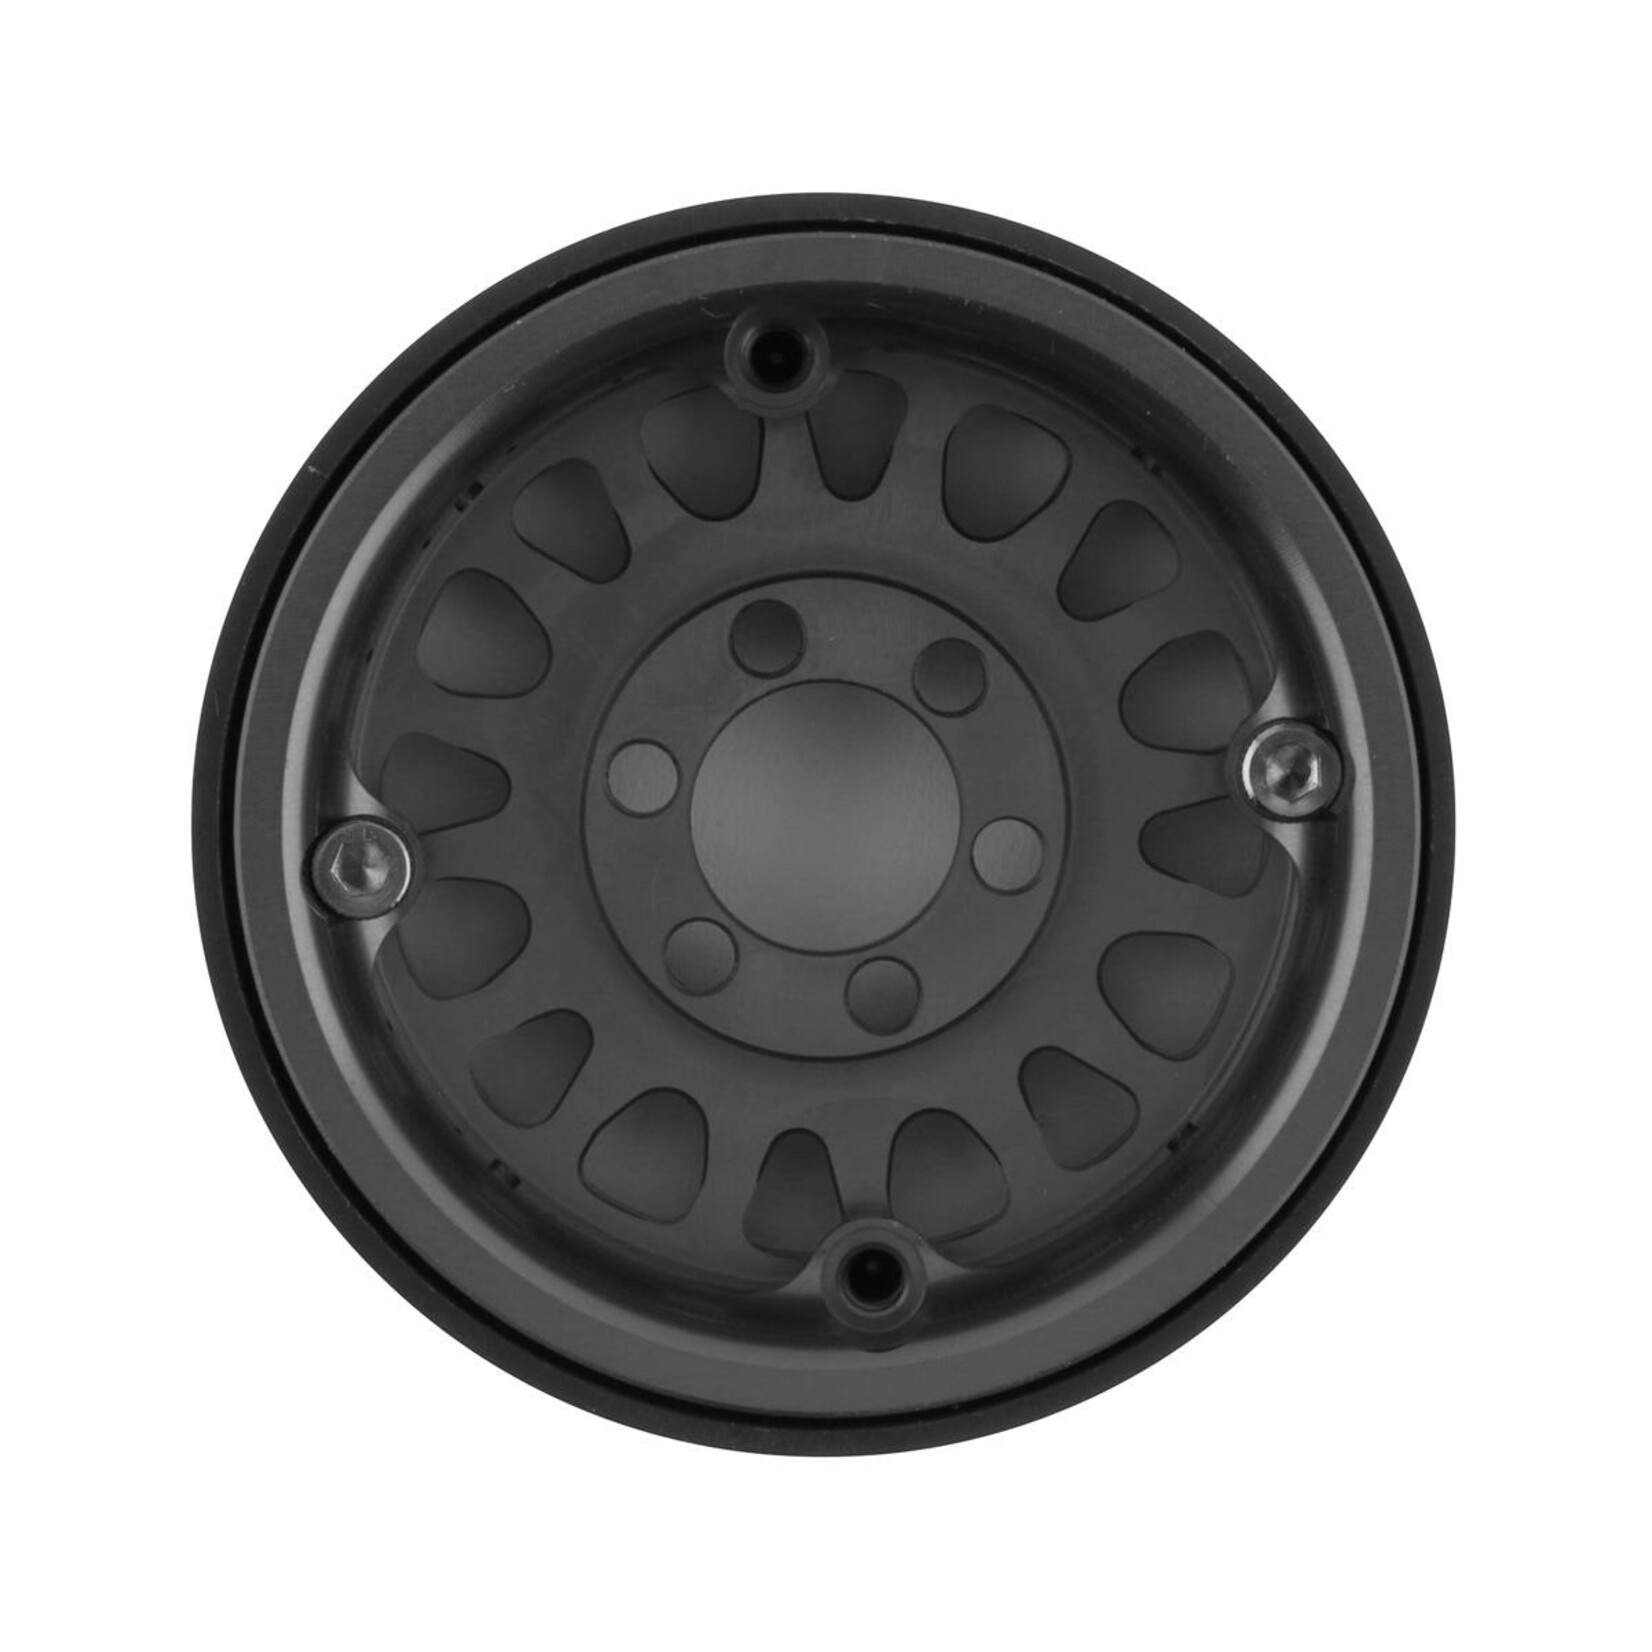 Vanquish Products Vanquish Products KMC KM445 Impact 1.9" Beadlock Crawler Wheels (Grey) (2) #VPS07803